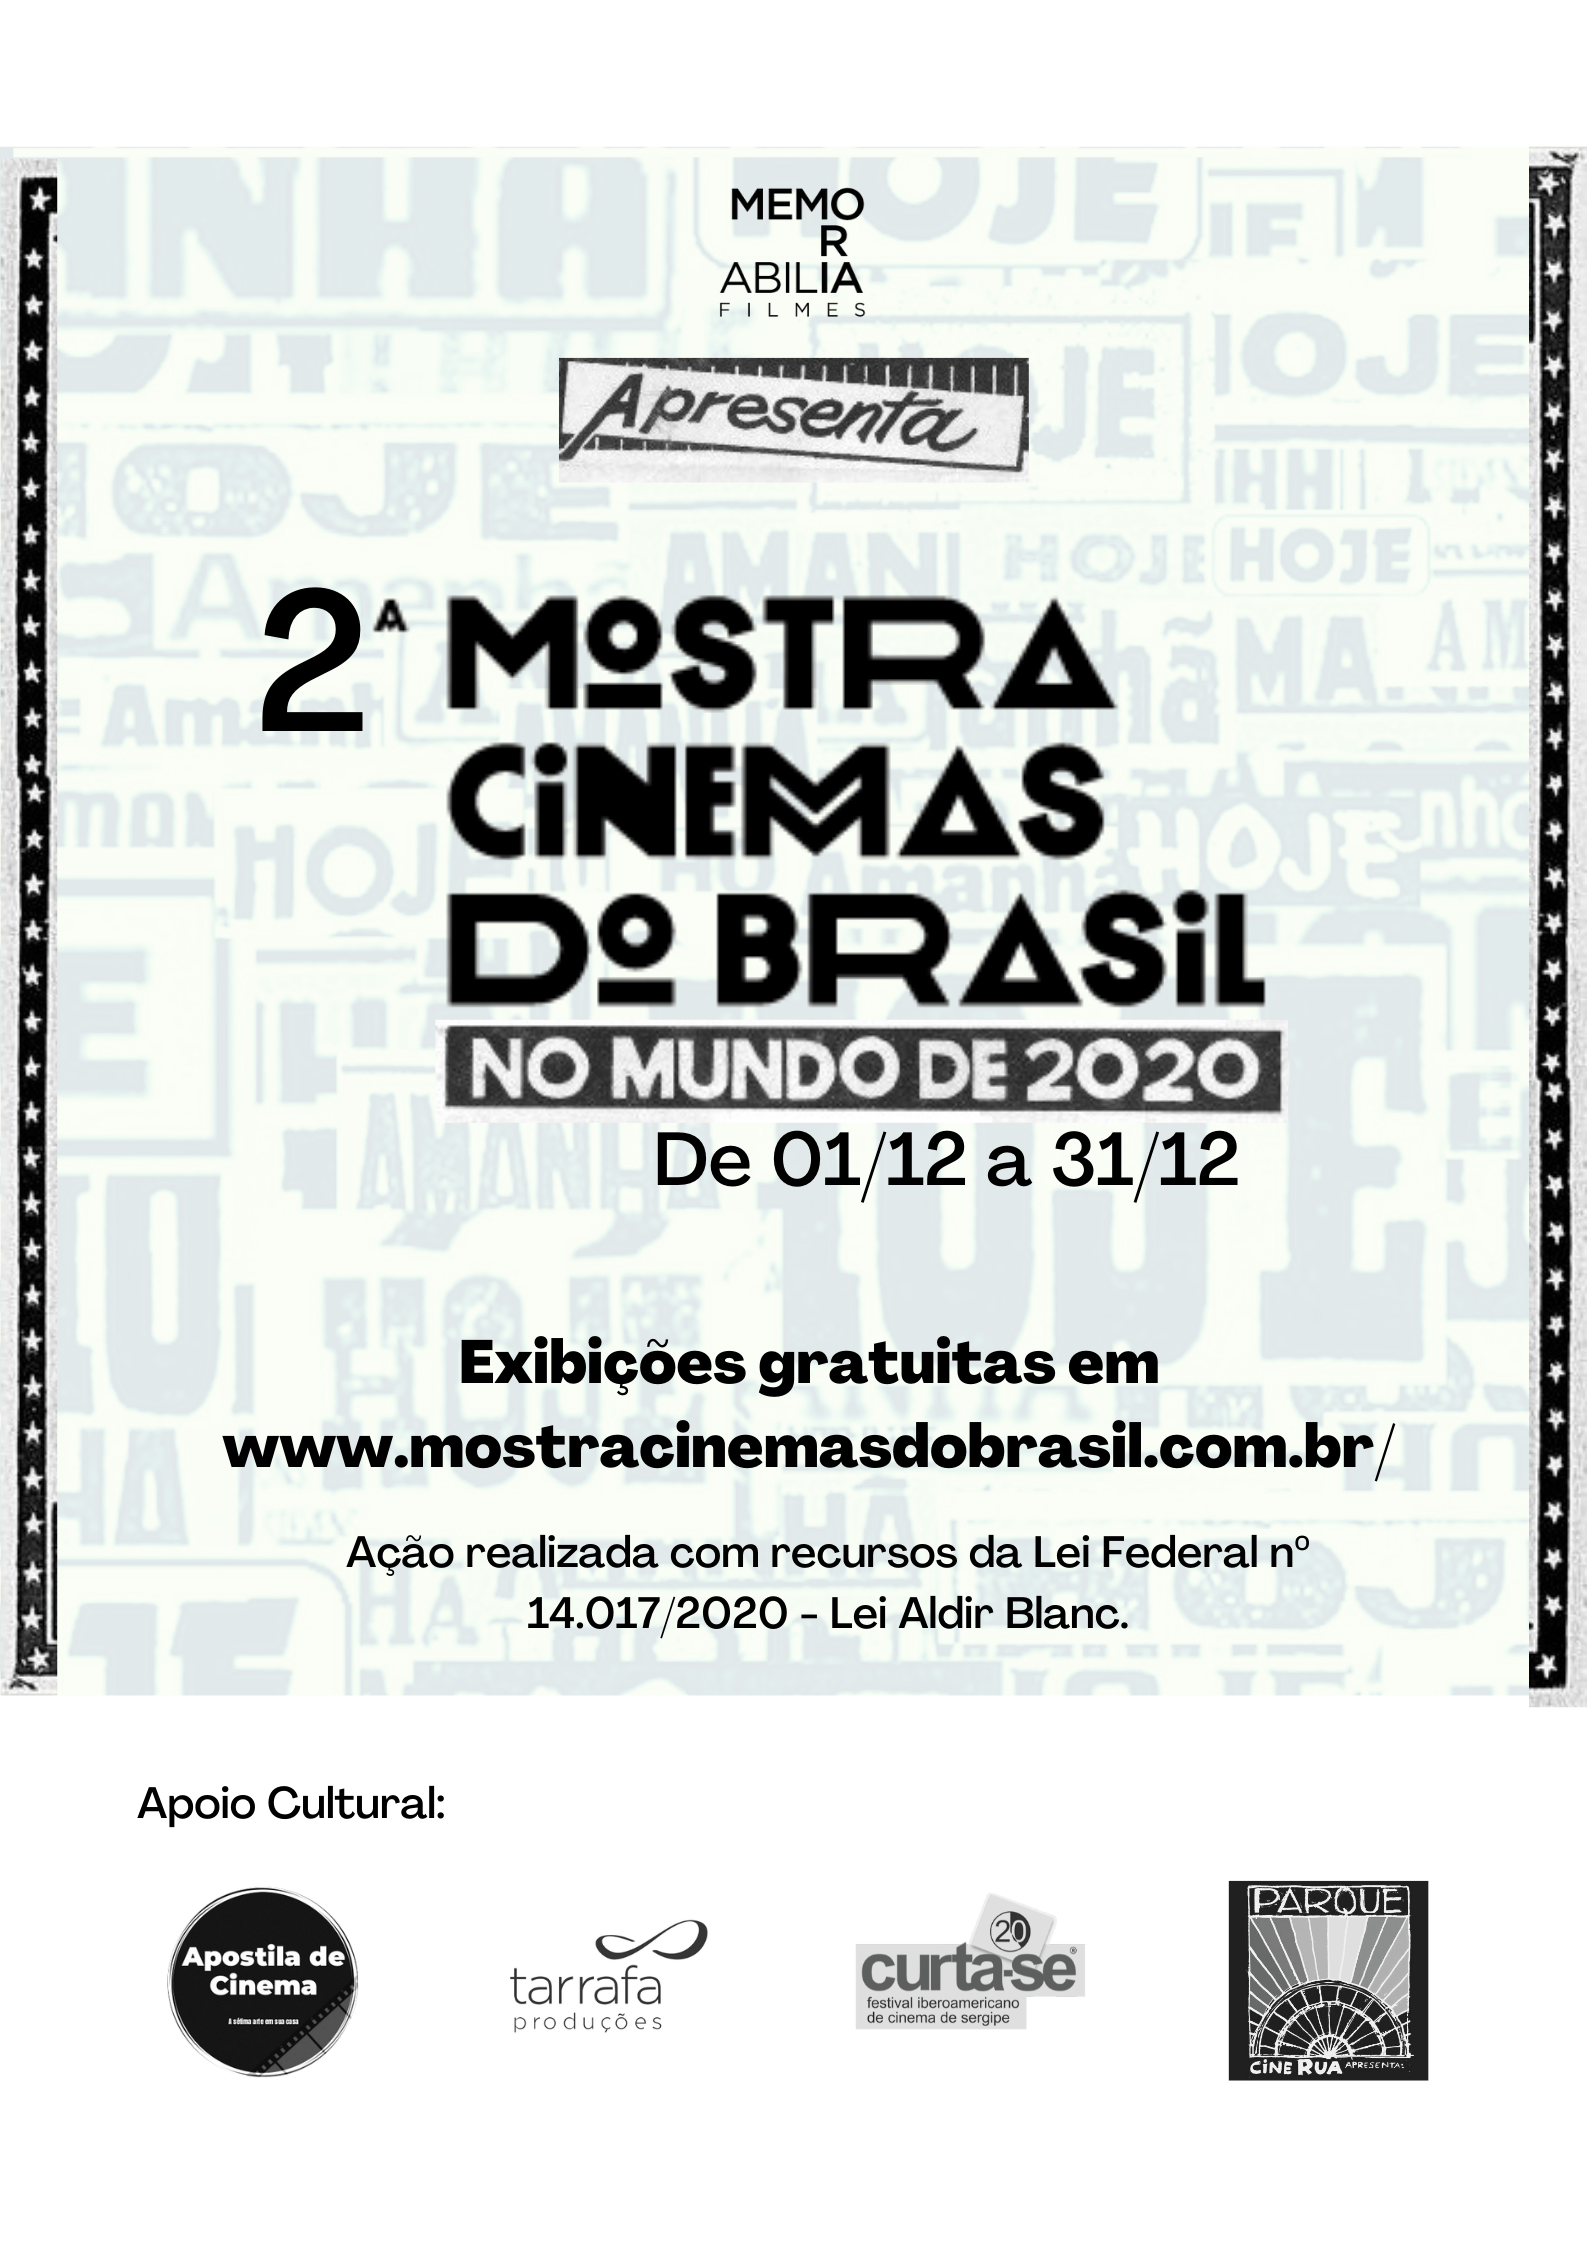 Mostra Cinemas do Brasil Pôster